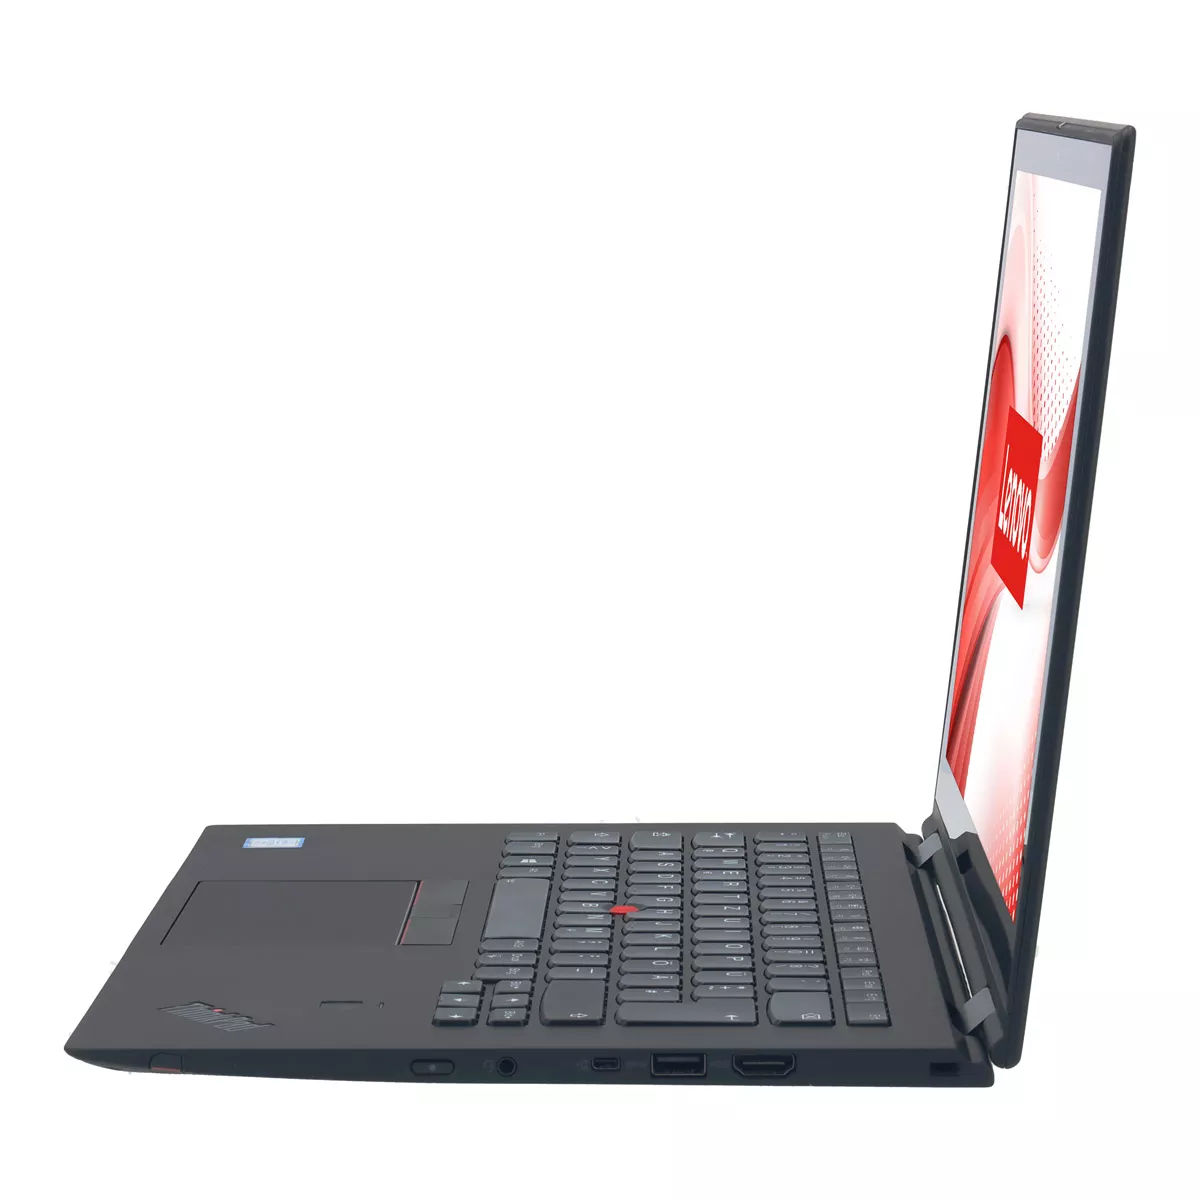 Lenovo ThinkPad X1 Yoga G3 Core i5 8350U Touch 240 GB M.2 SSD Webcam A+